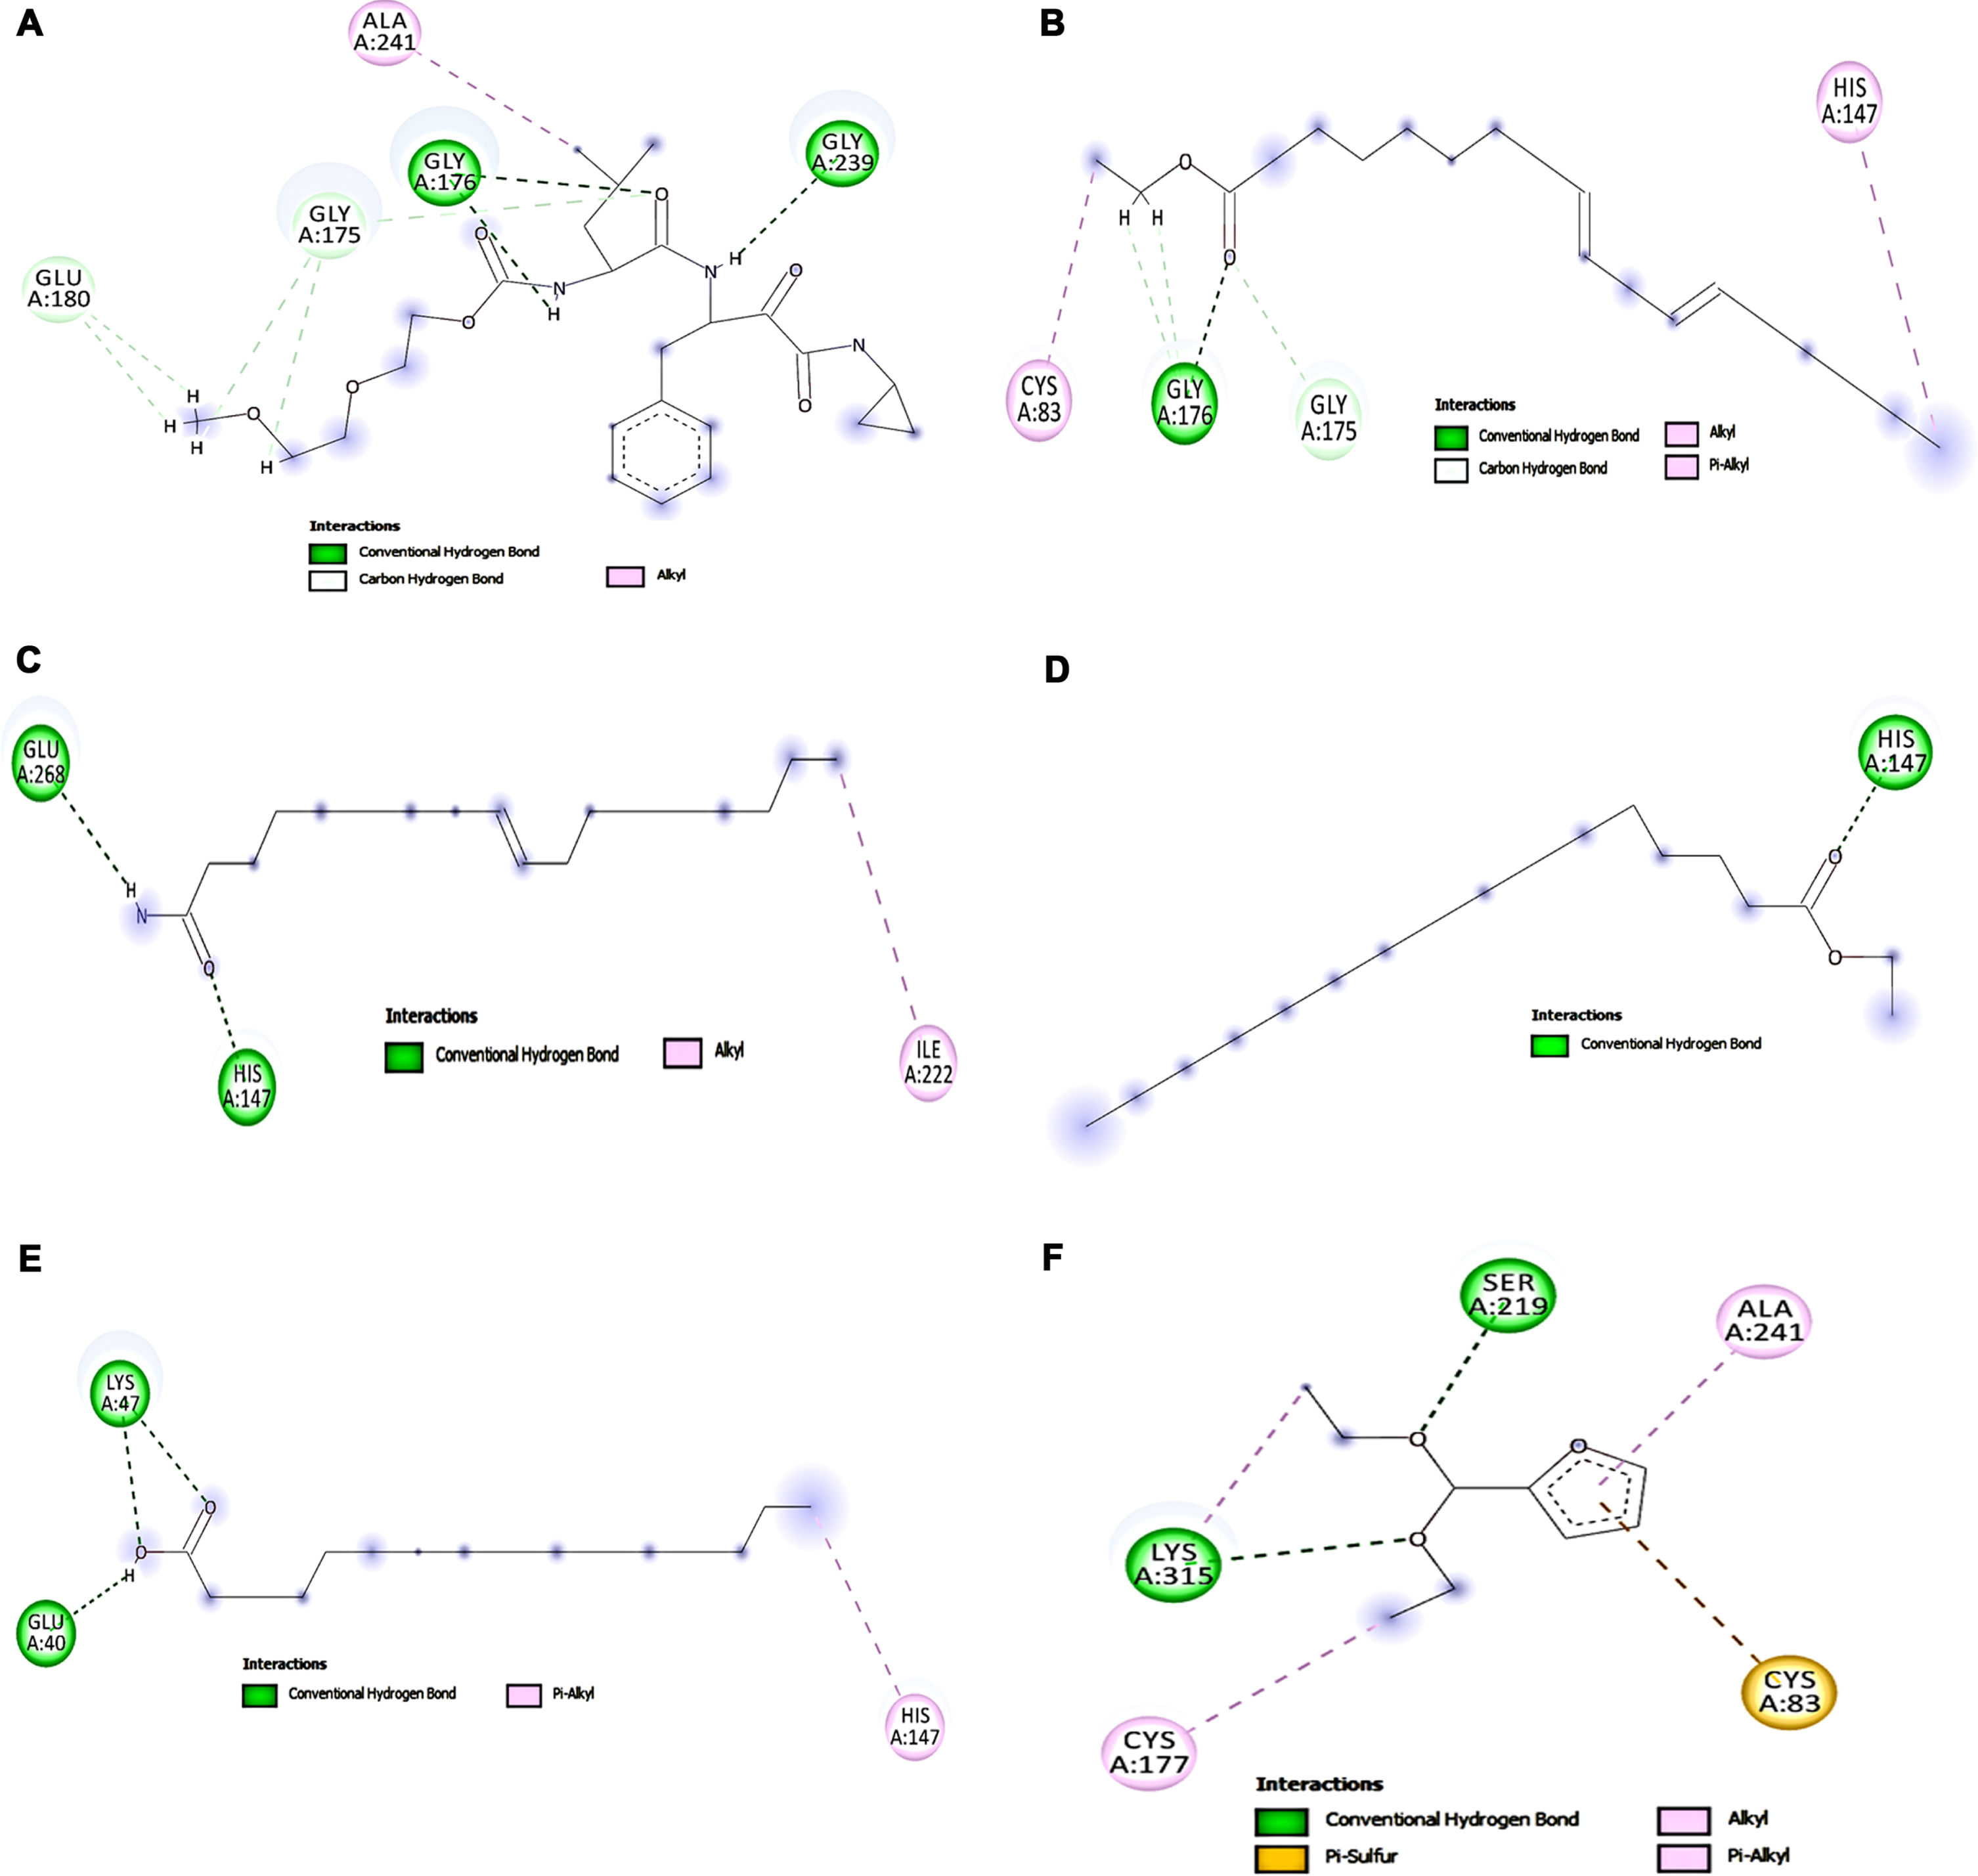 Molecular docking analysis of top 5 compounds in HS against Calpain-1 (A) SNJ-1945 (B) Ethyl linoleate (C) Oleamide (D) Ethyl palmitate (E) Palmitic acid (F) 2-(diethoxymethyl)furan.